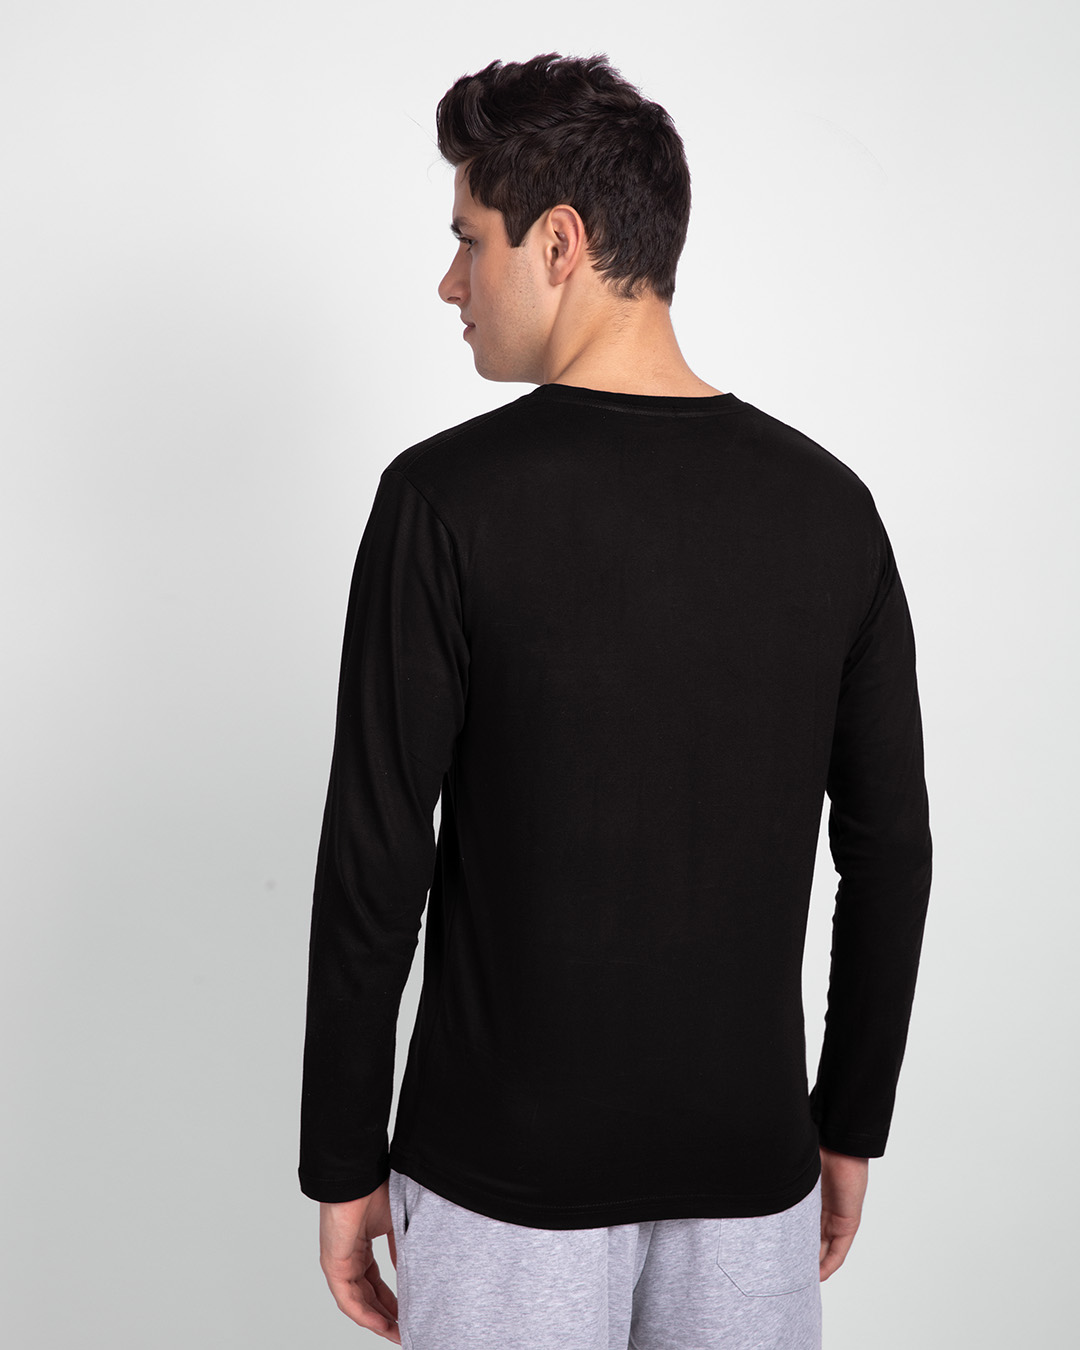 Shop Legend Panel Full Sleeve T-Shirt Black-Back